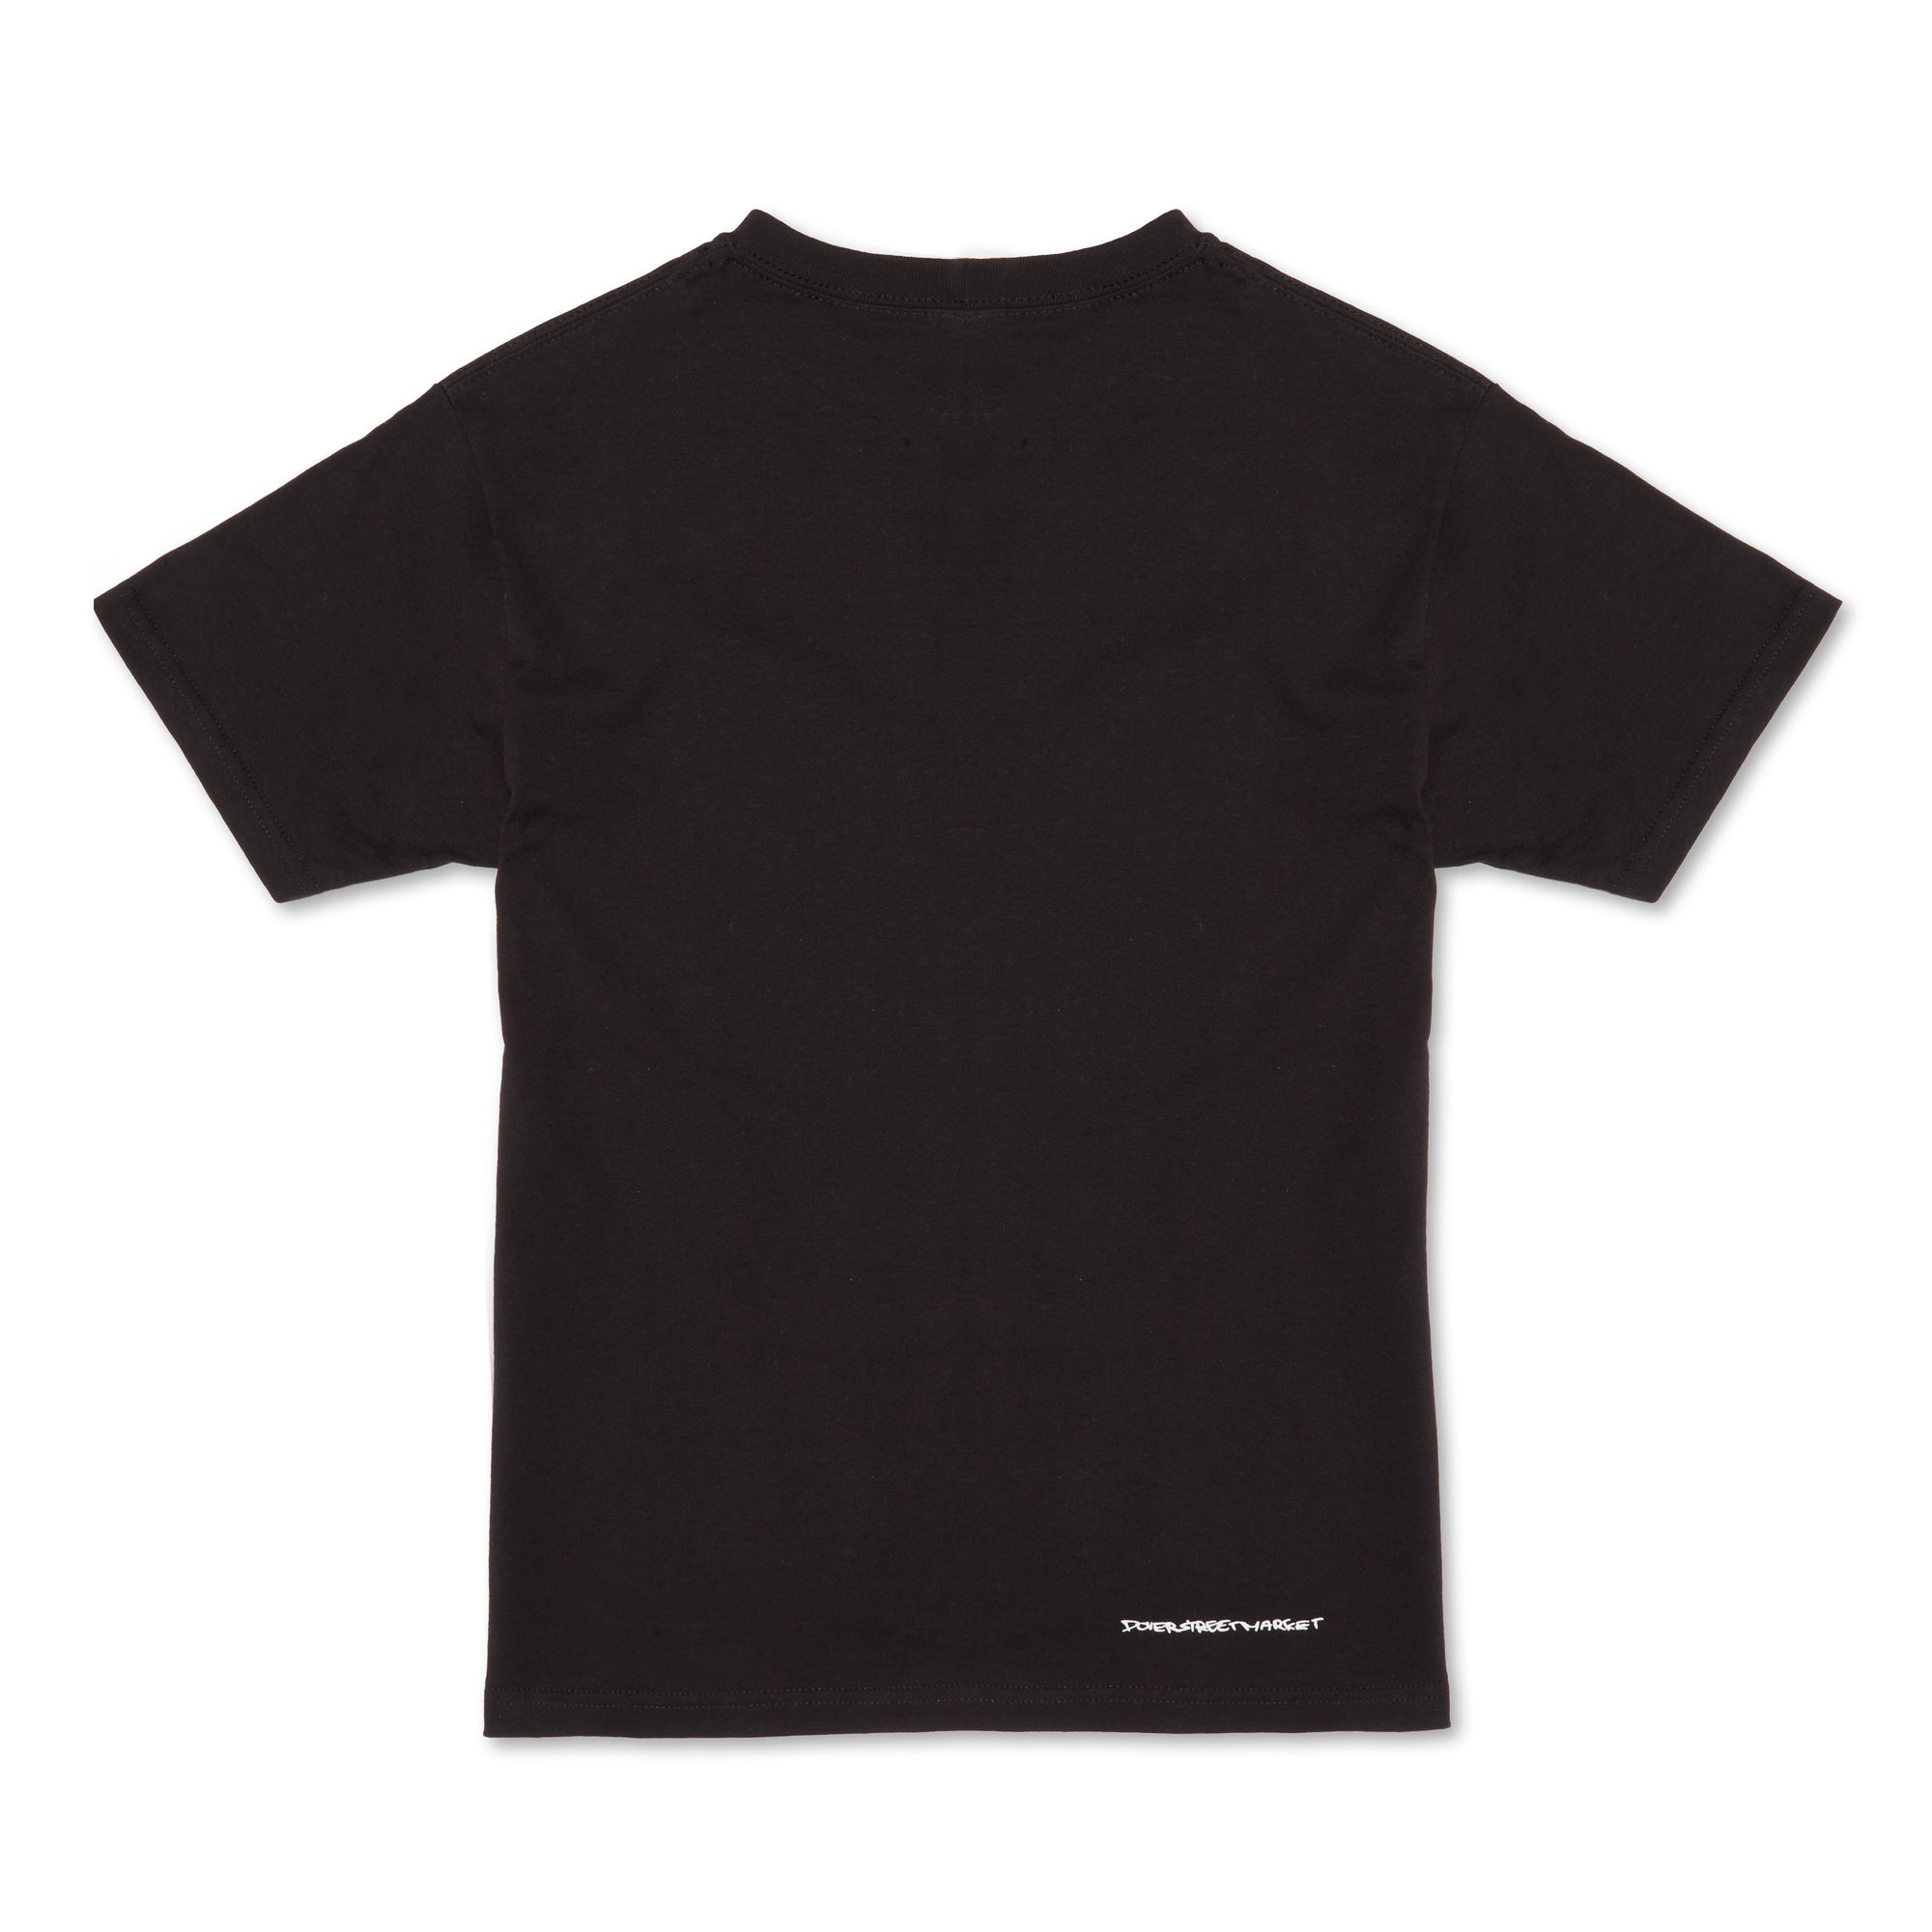 Slawn - Dover Street Market T-Shirt - (Black) view 2